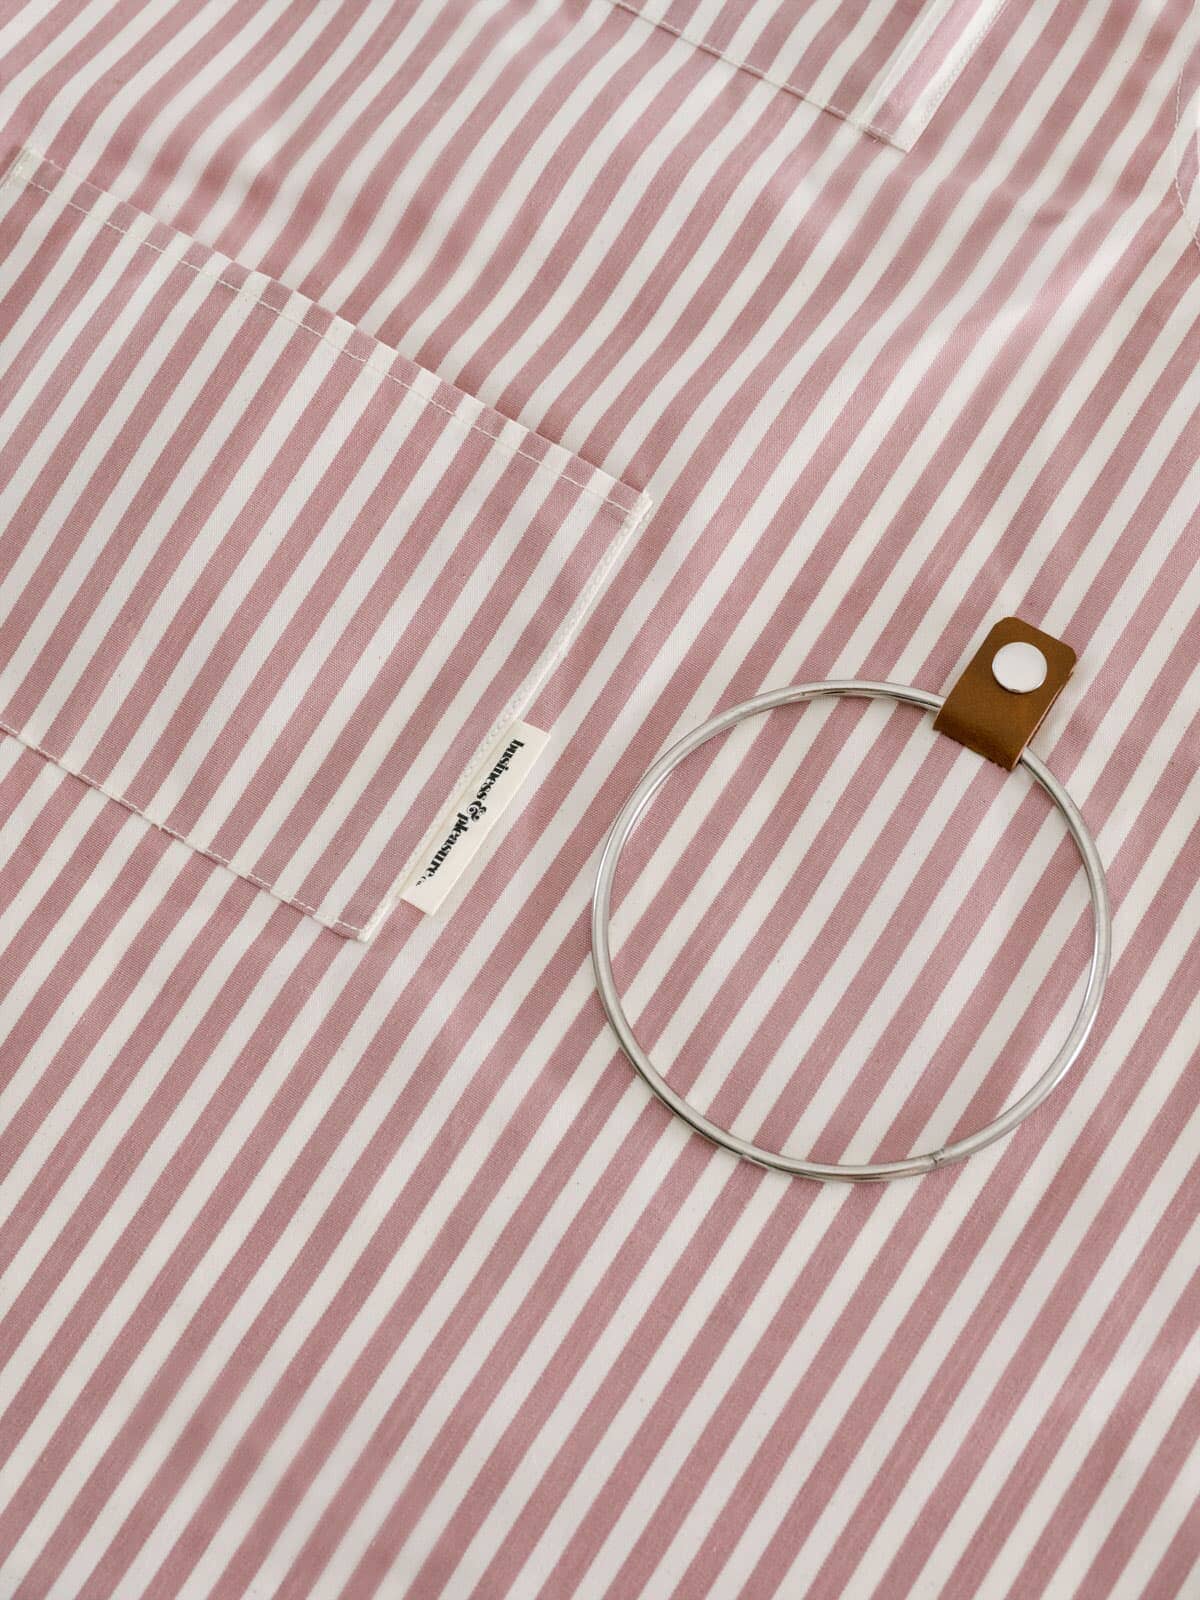 Studio image of pink apron